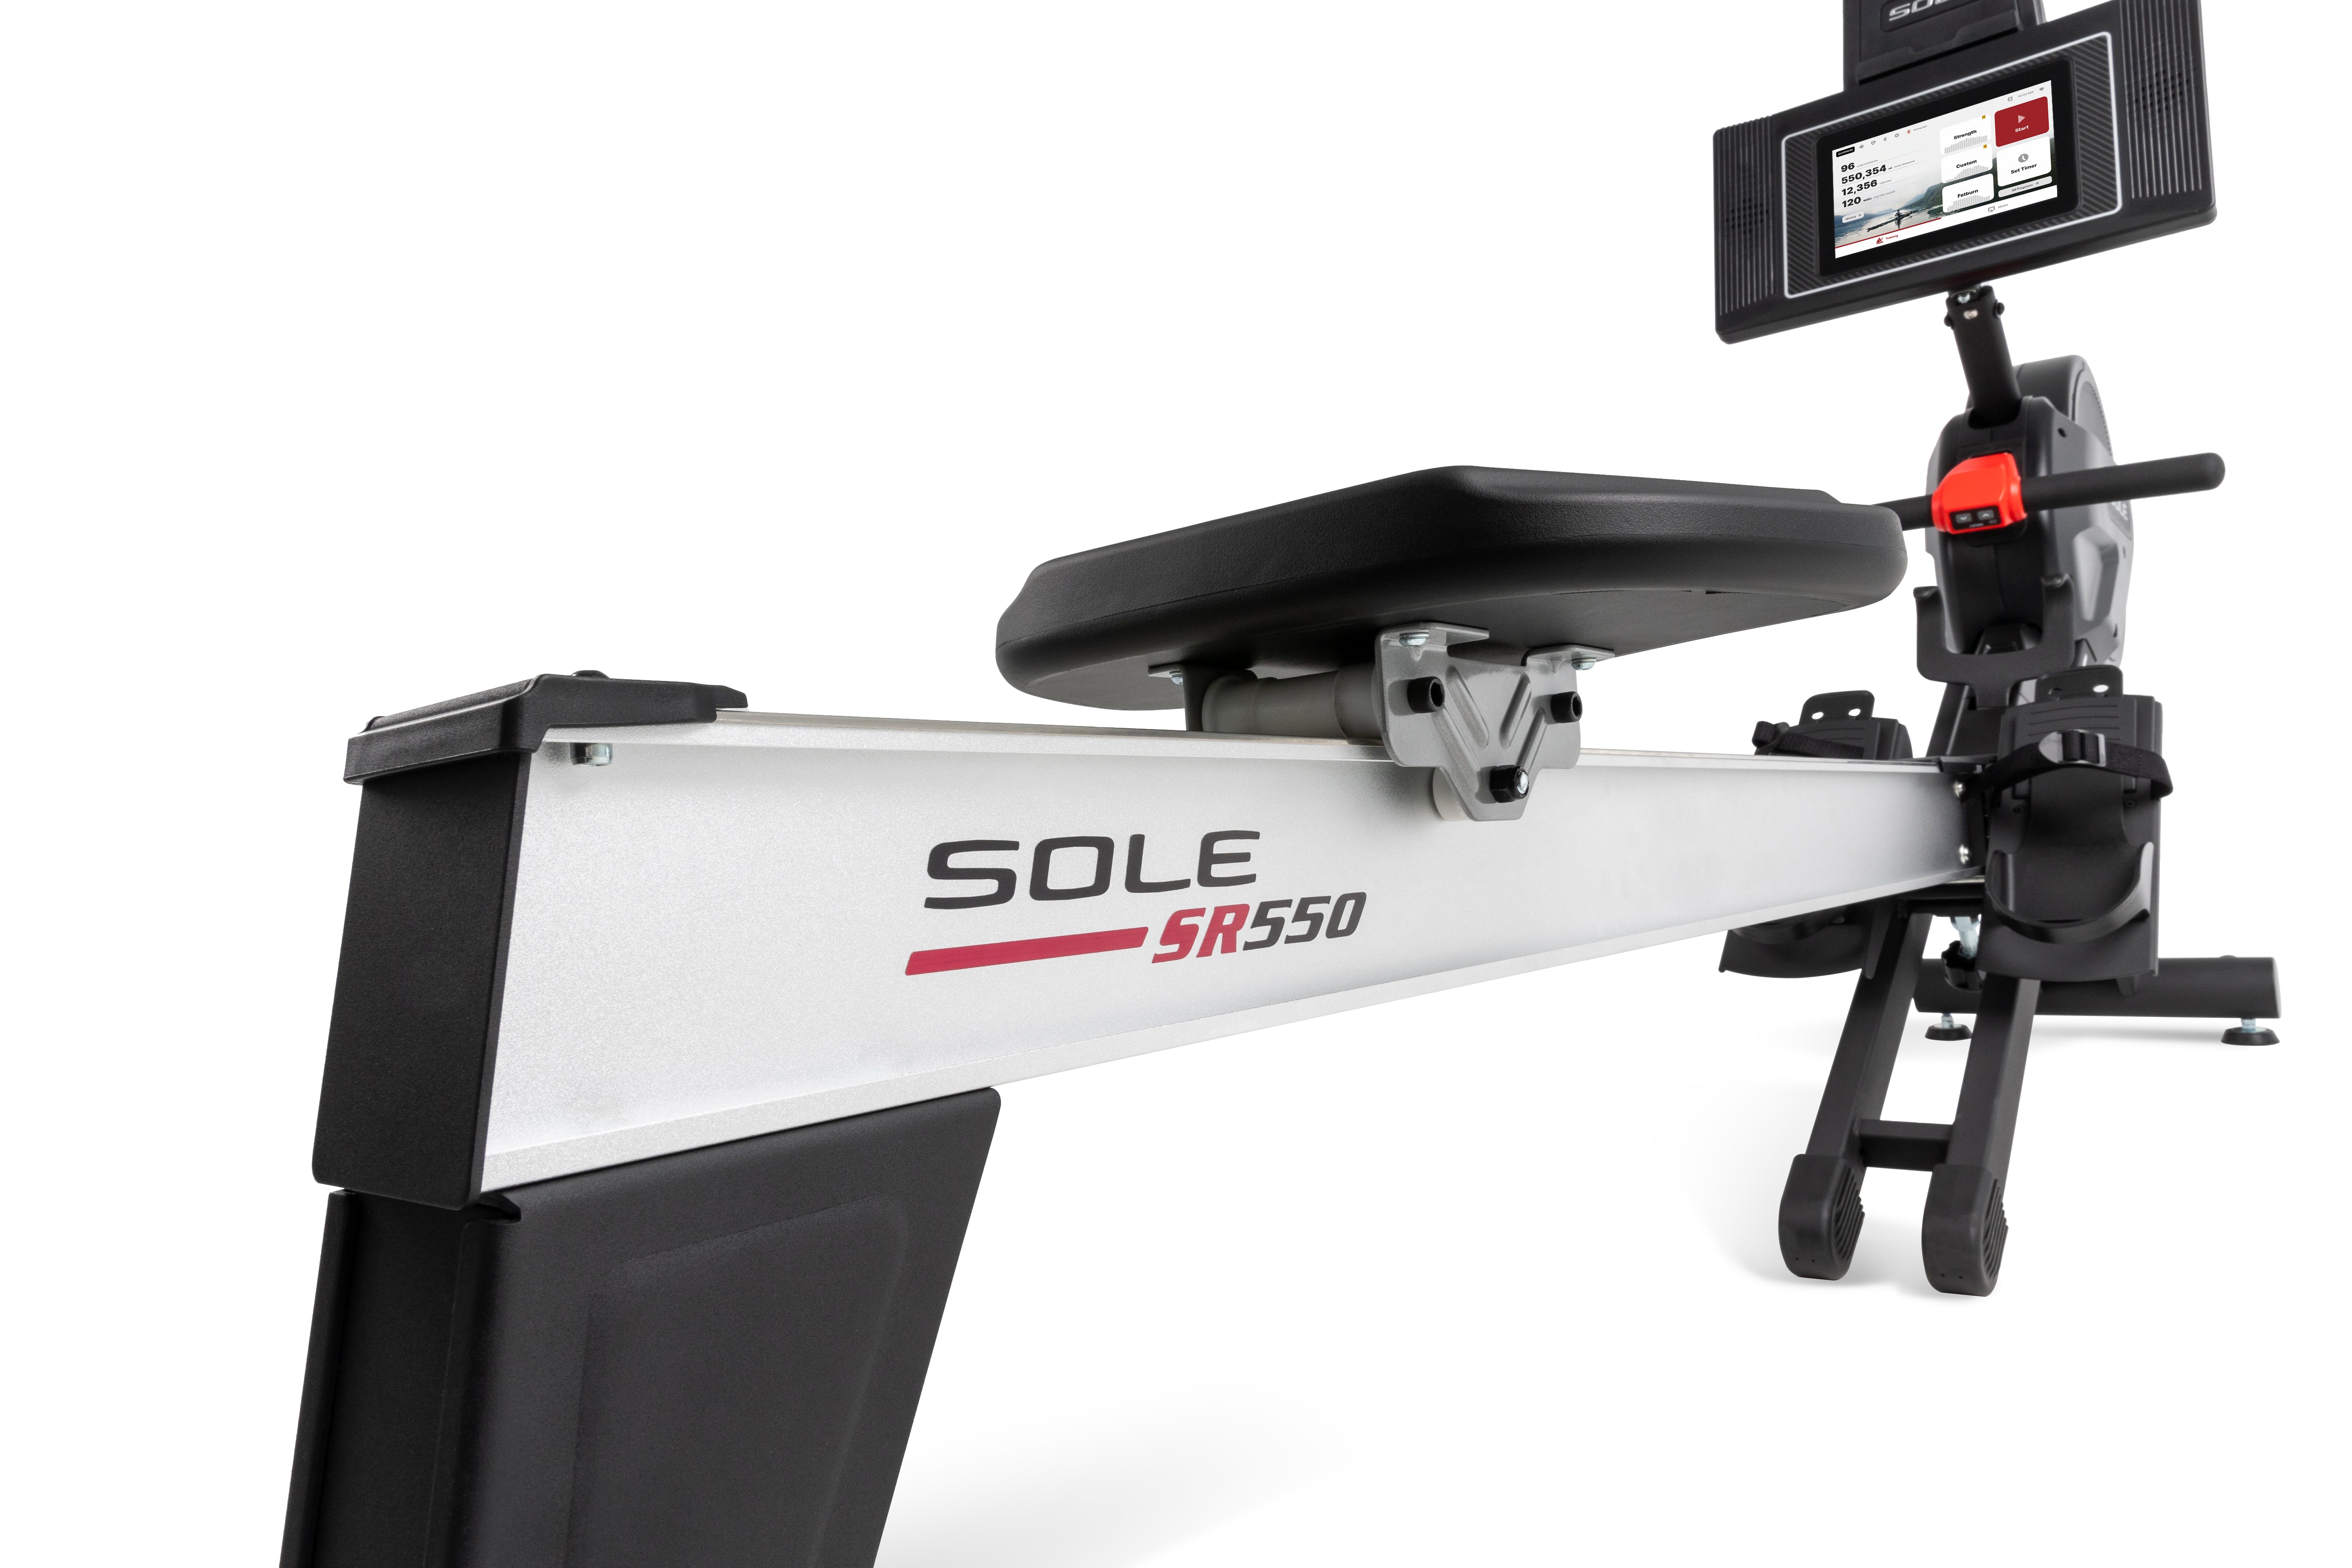 SOLE SR550 Rowing Machine